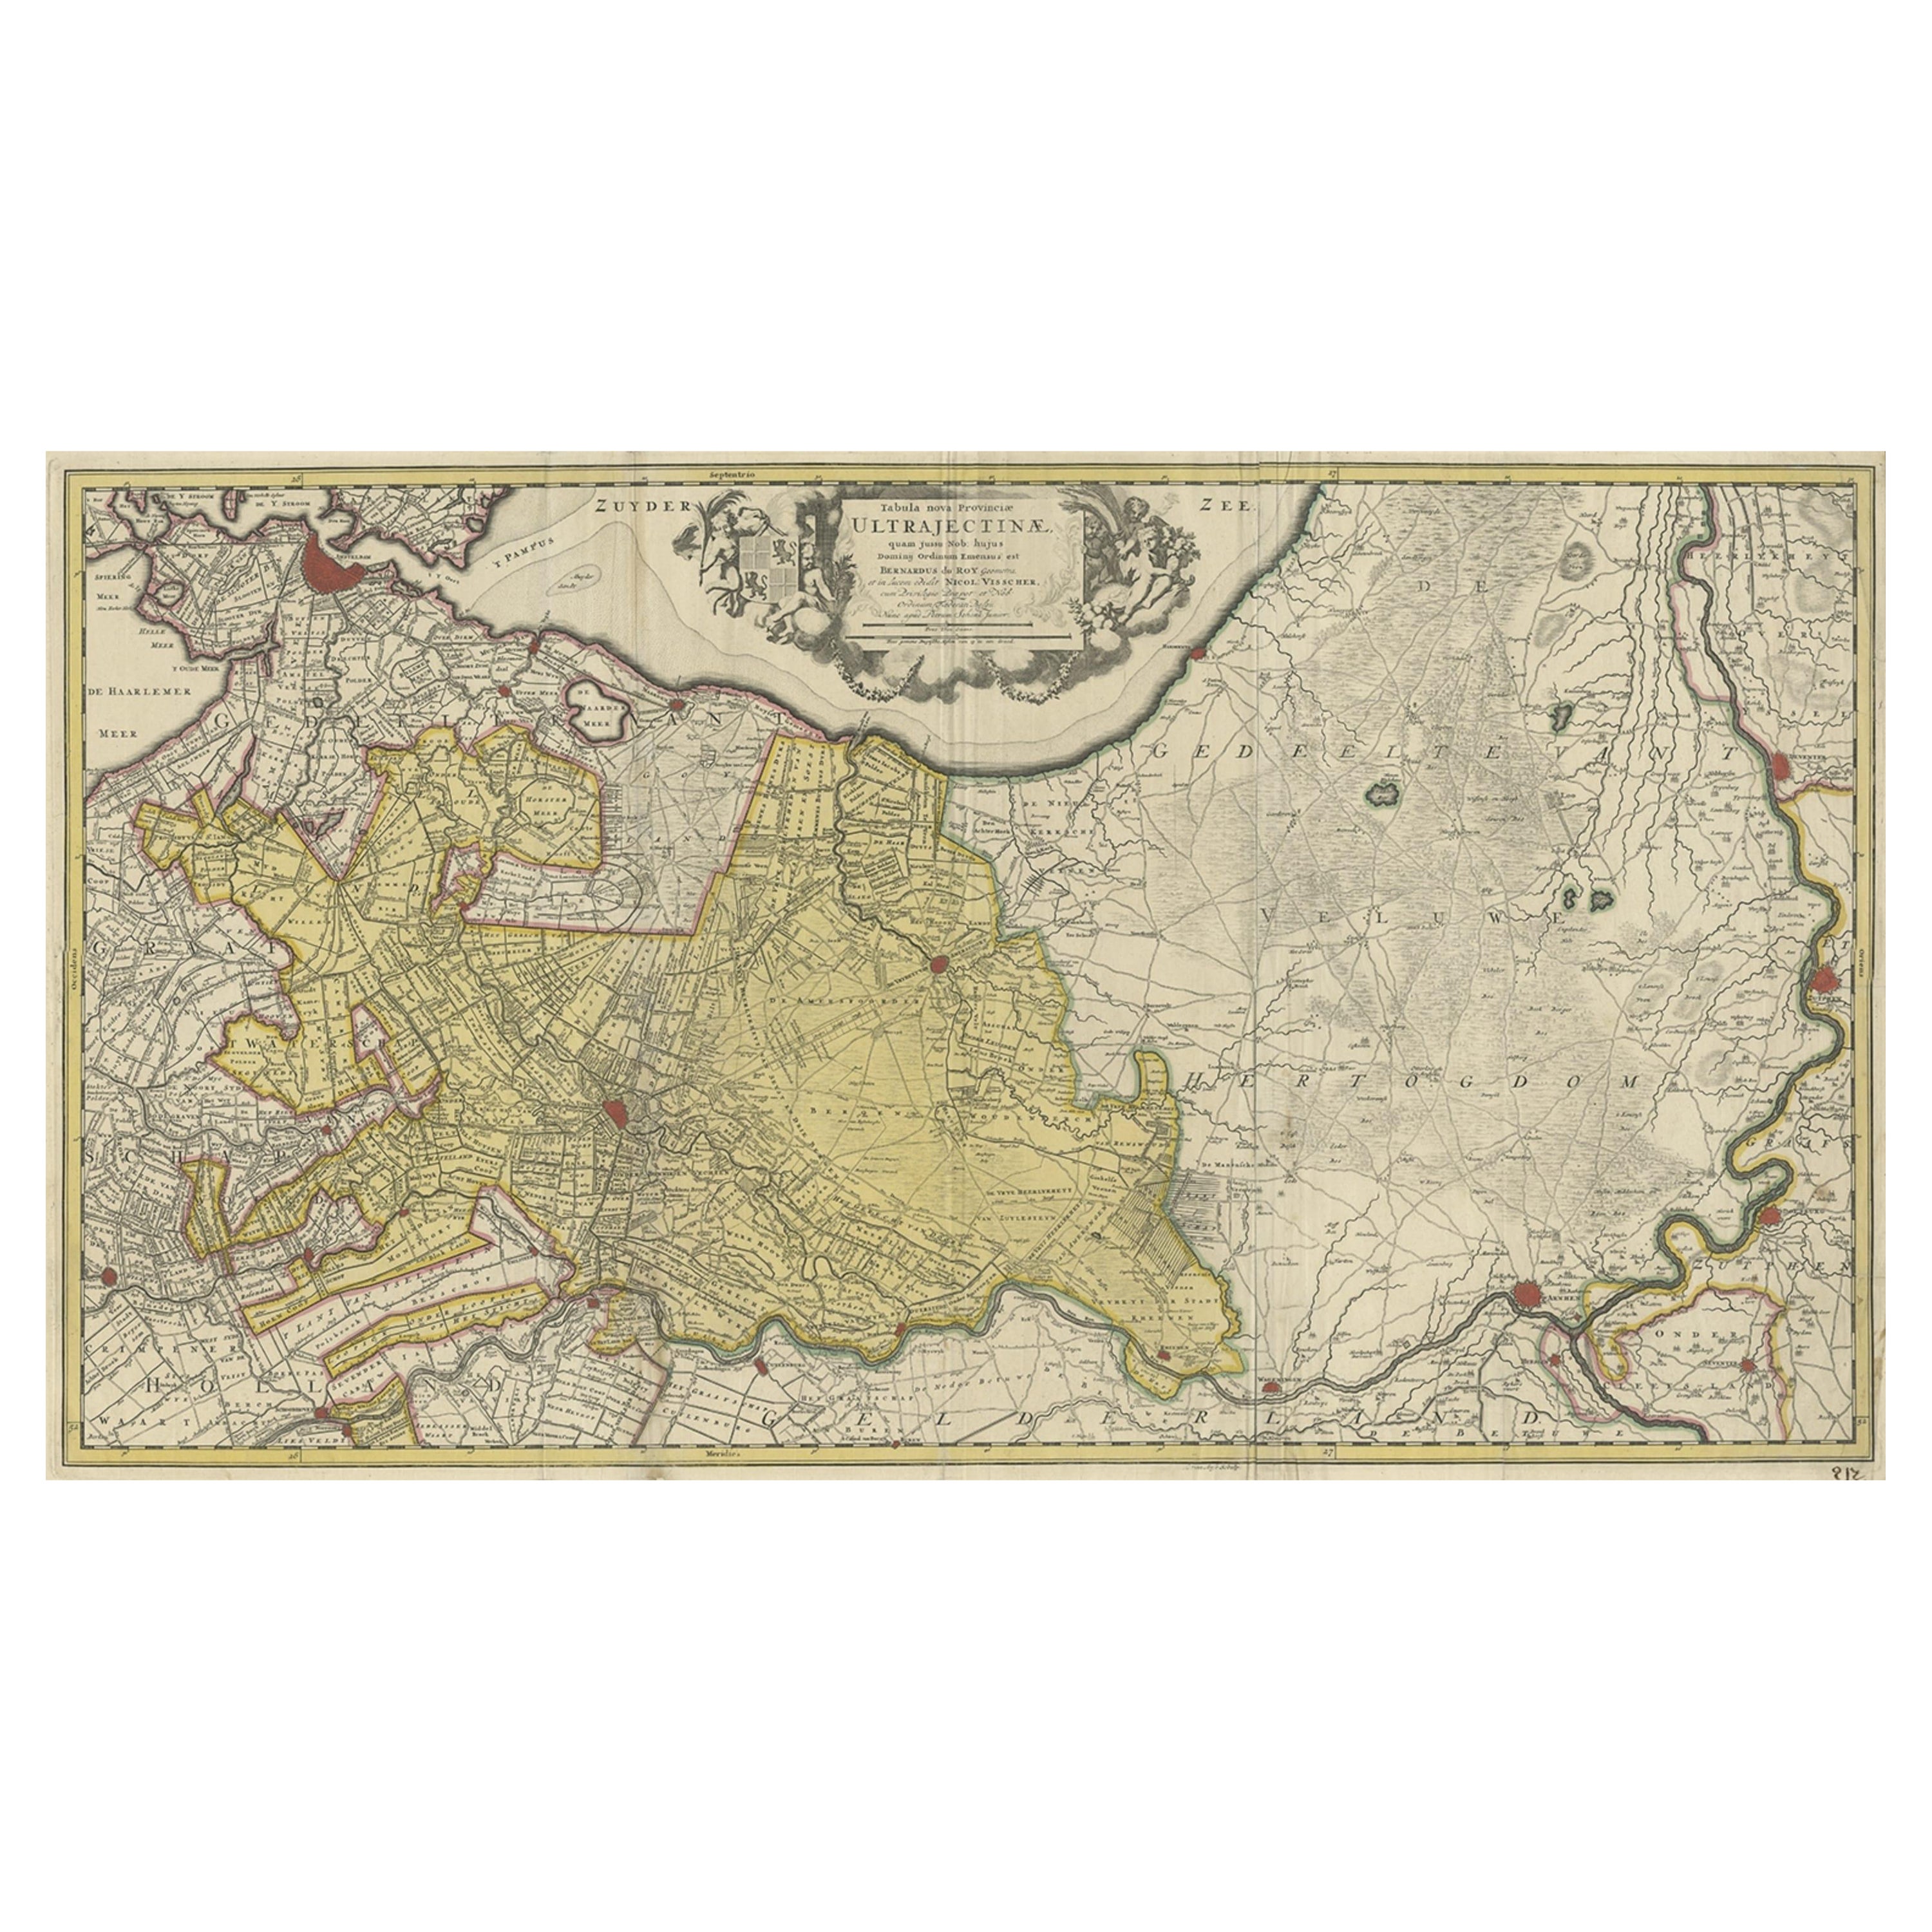 Original Antike Karte der Provinz Utrecht, Niederlande, um 1720